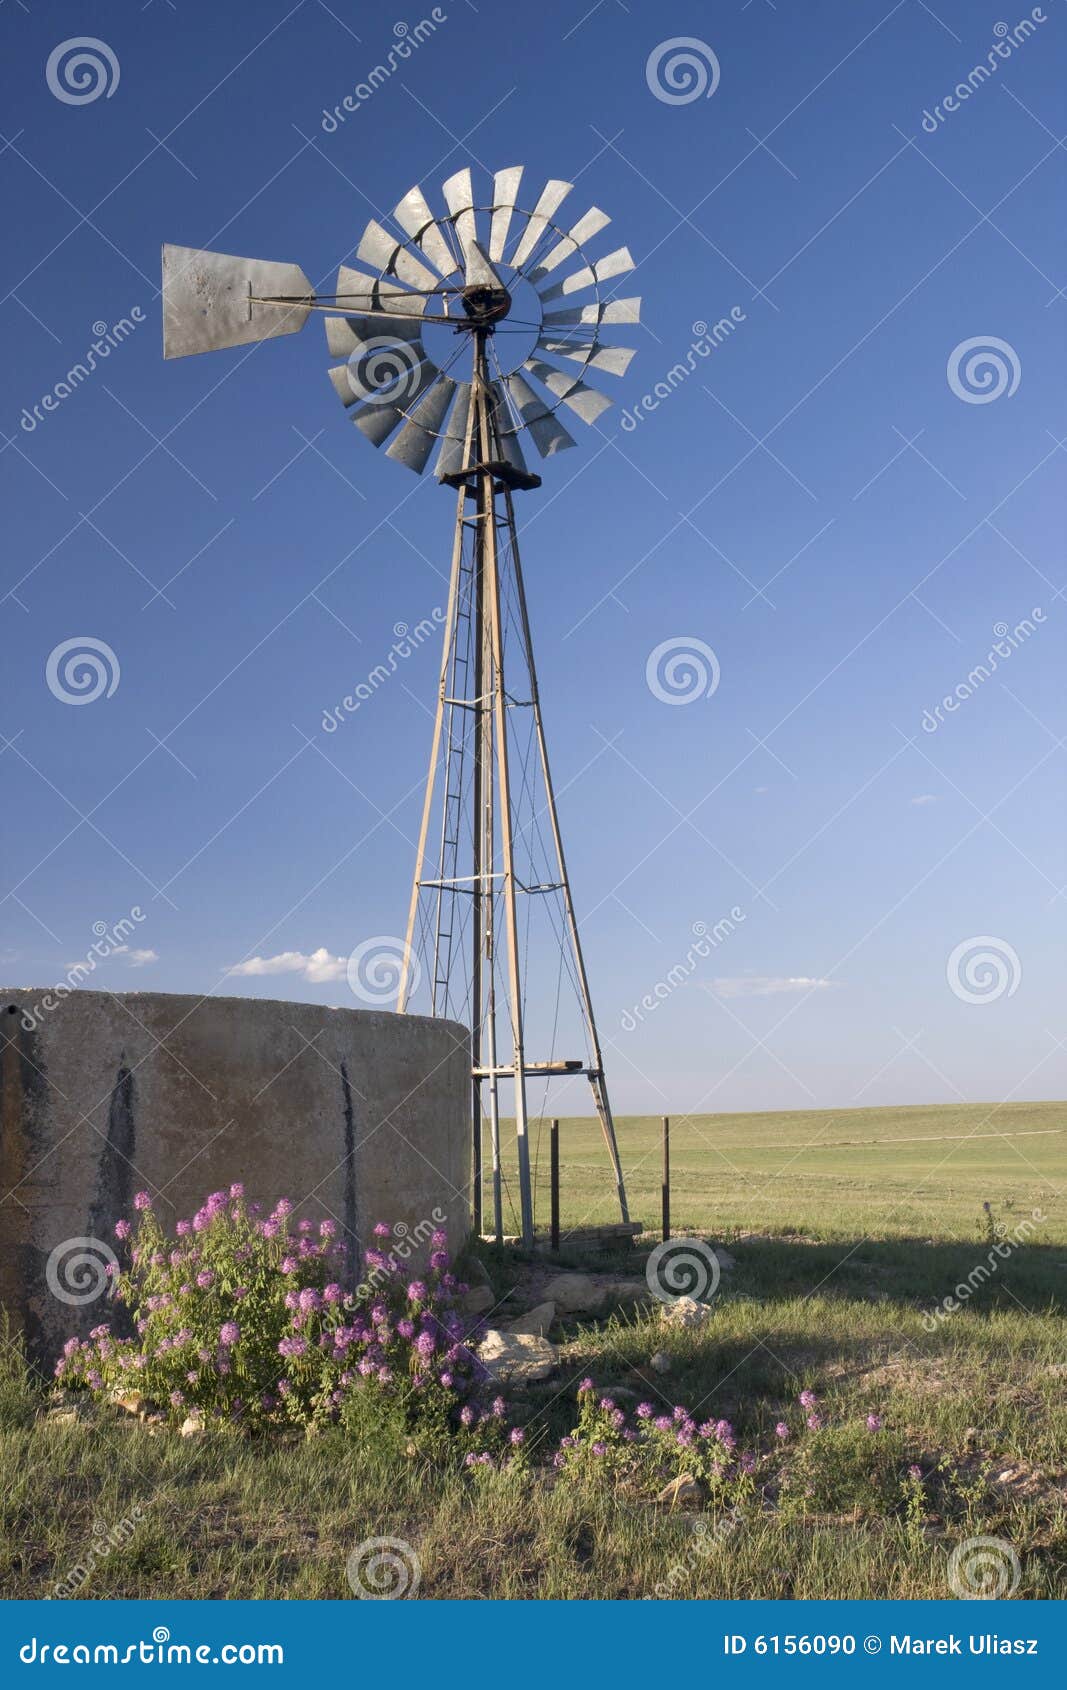 News Info: Complete Windmill water pump plans